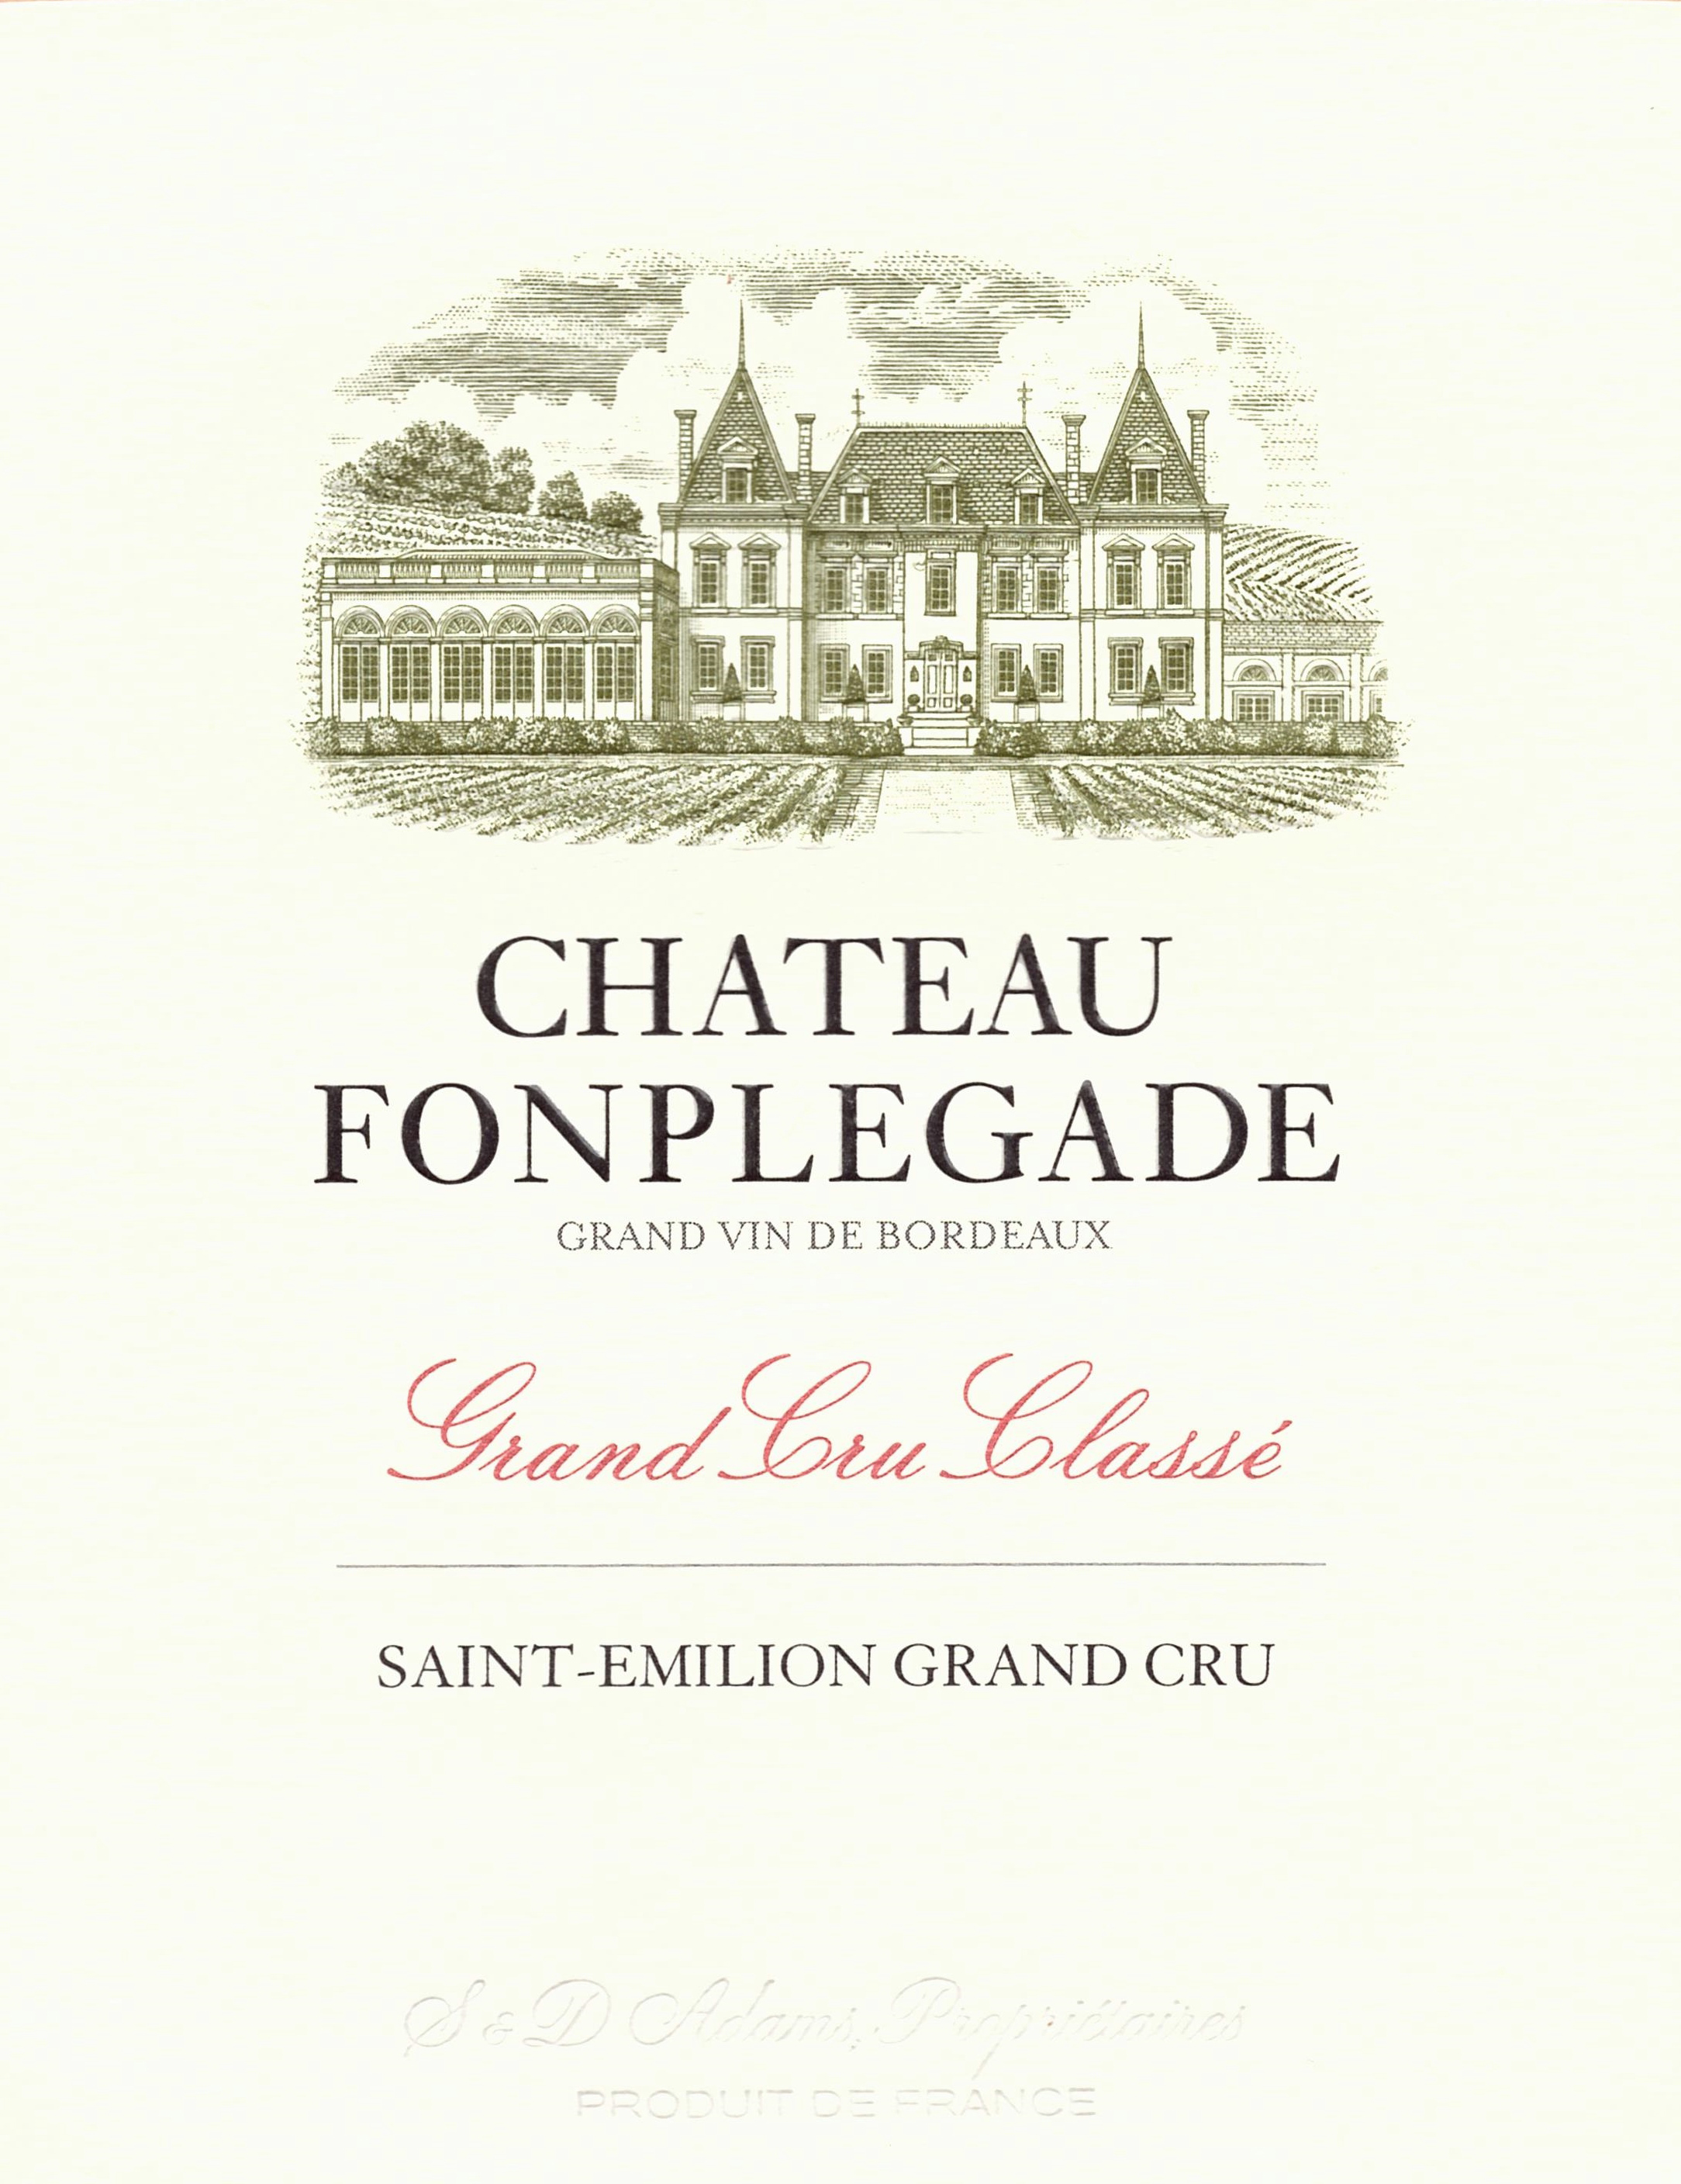 Chateau Fonplegade label